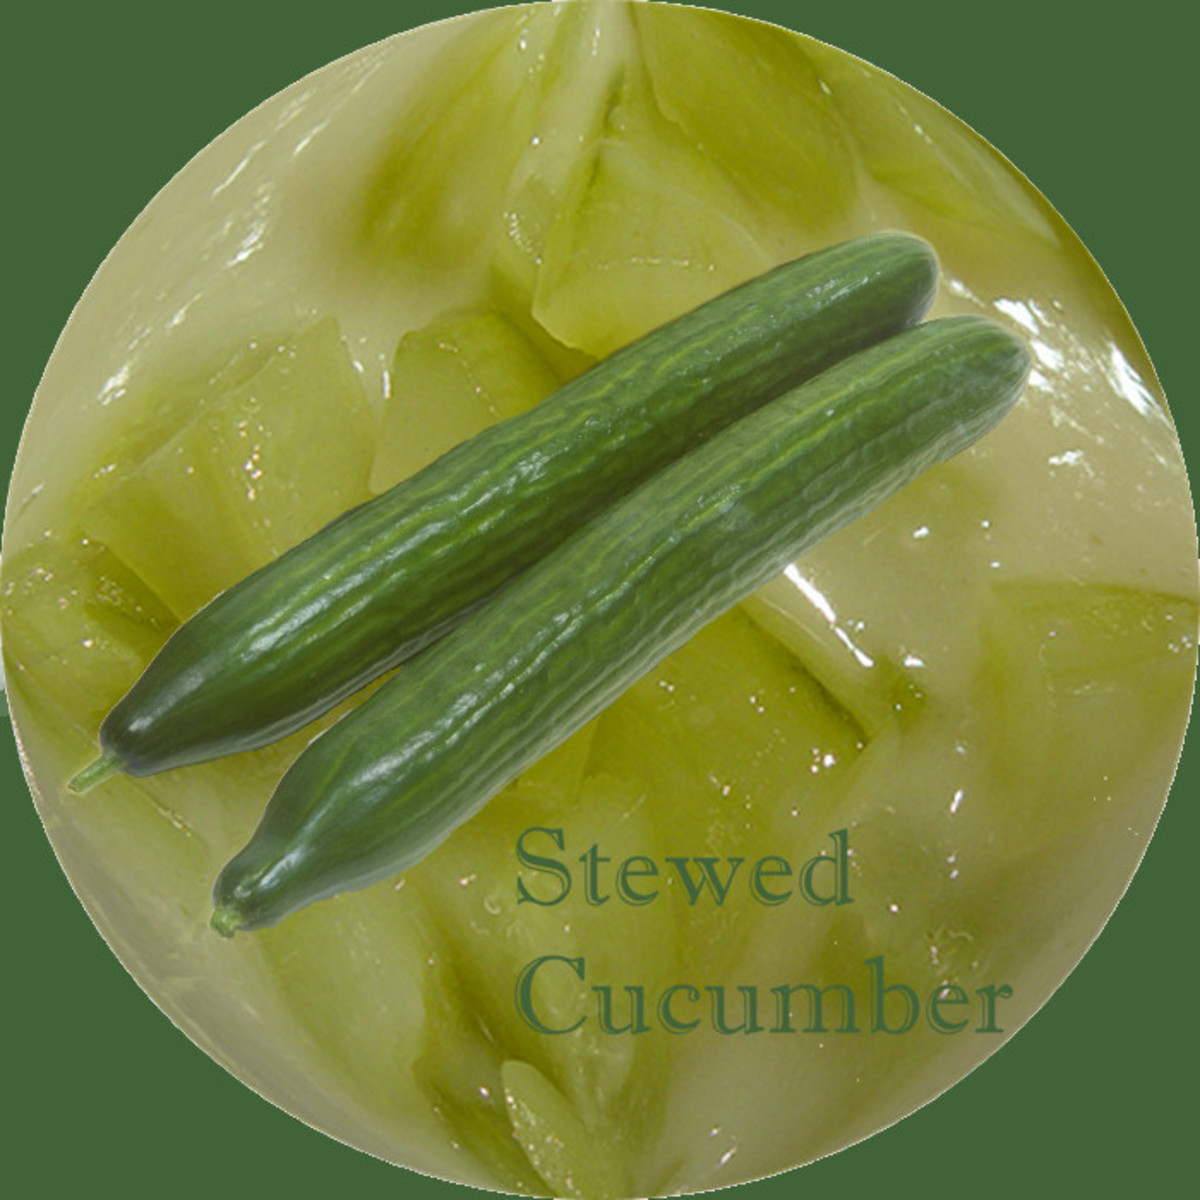 Stewed Cucumber